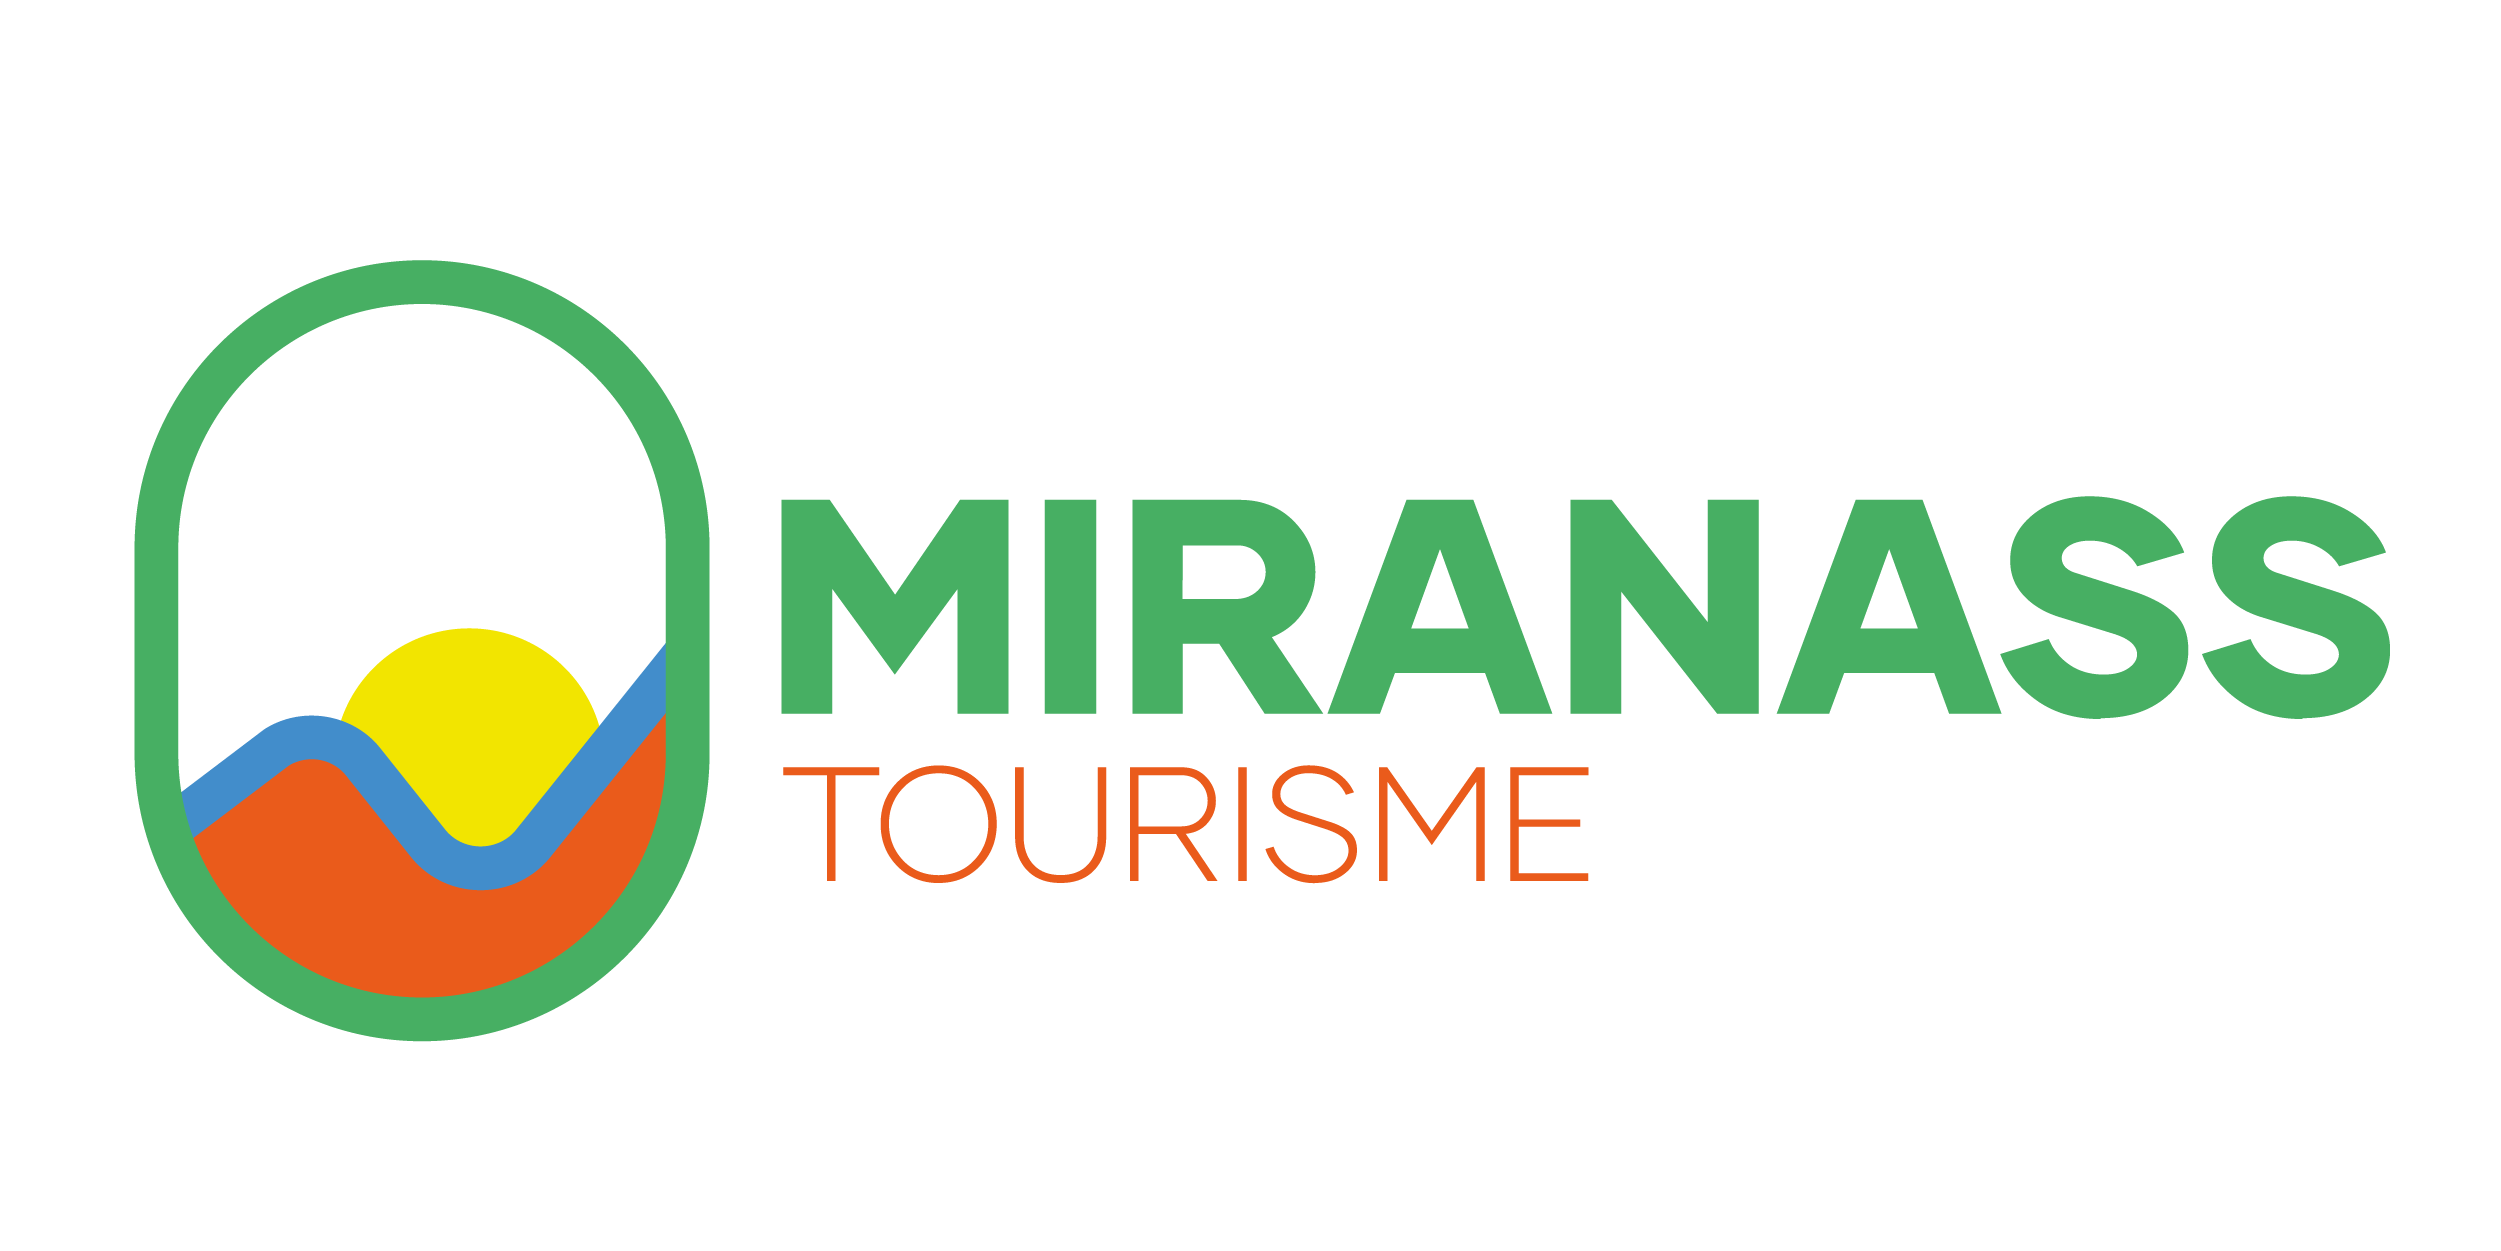 Miranass Tourisme